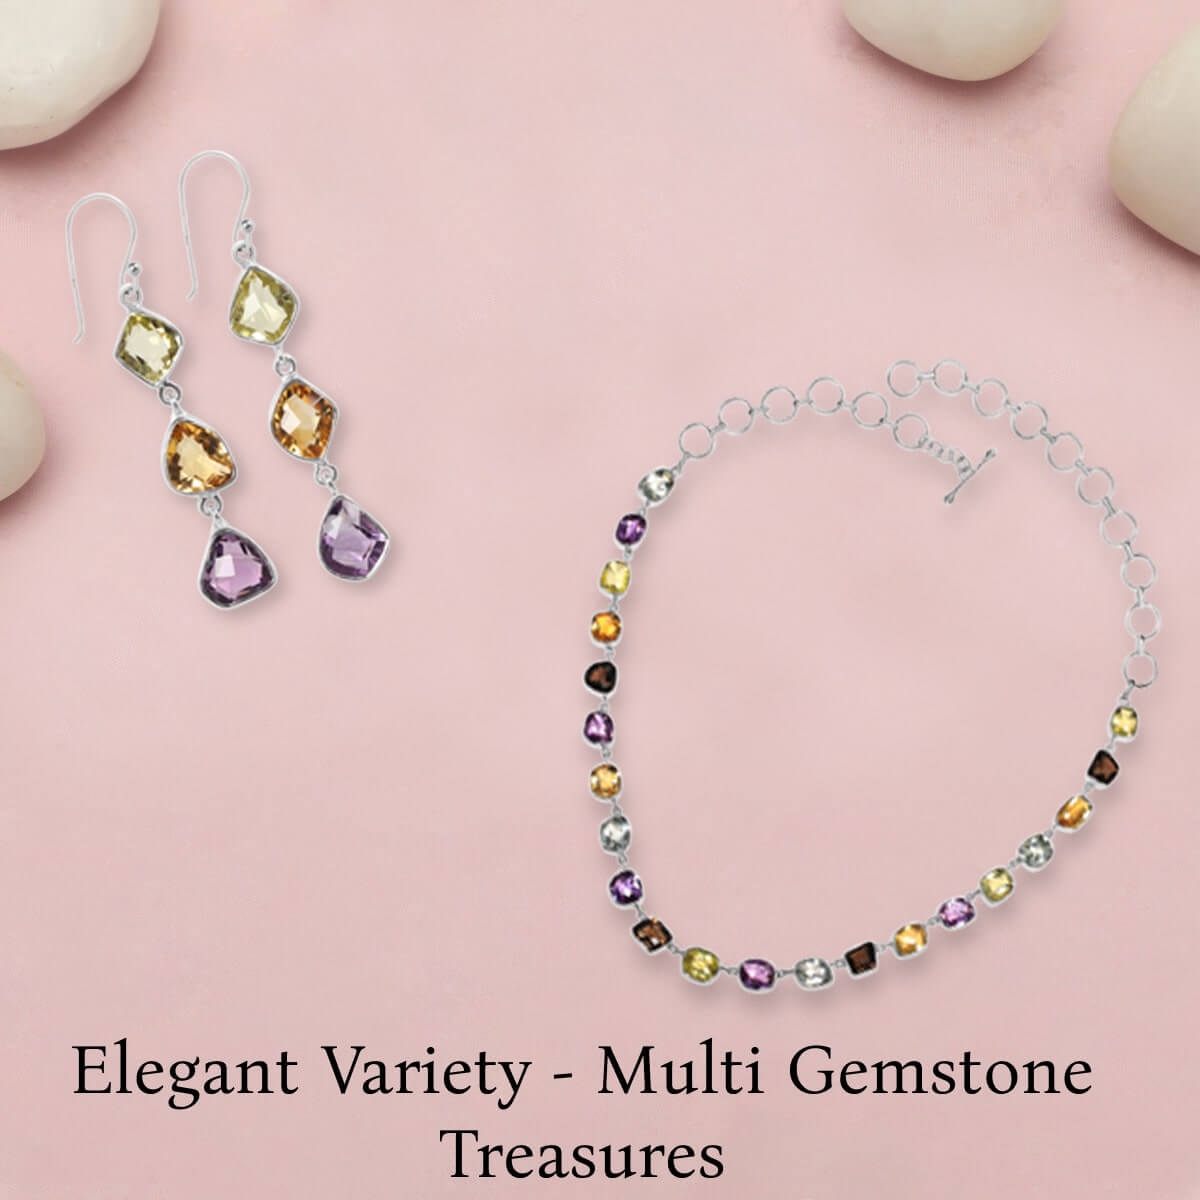 Multi Gemstone Jewelry Types